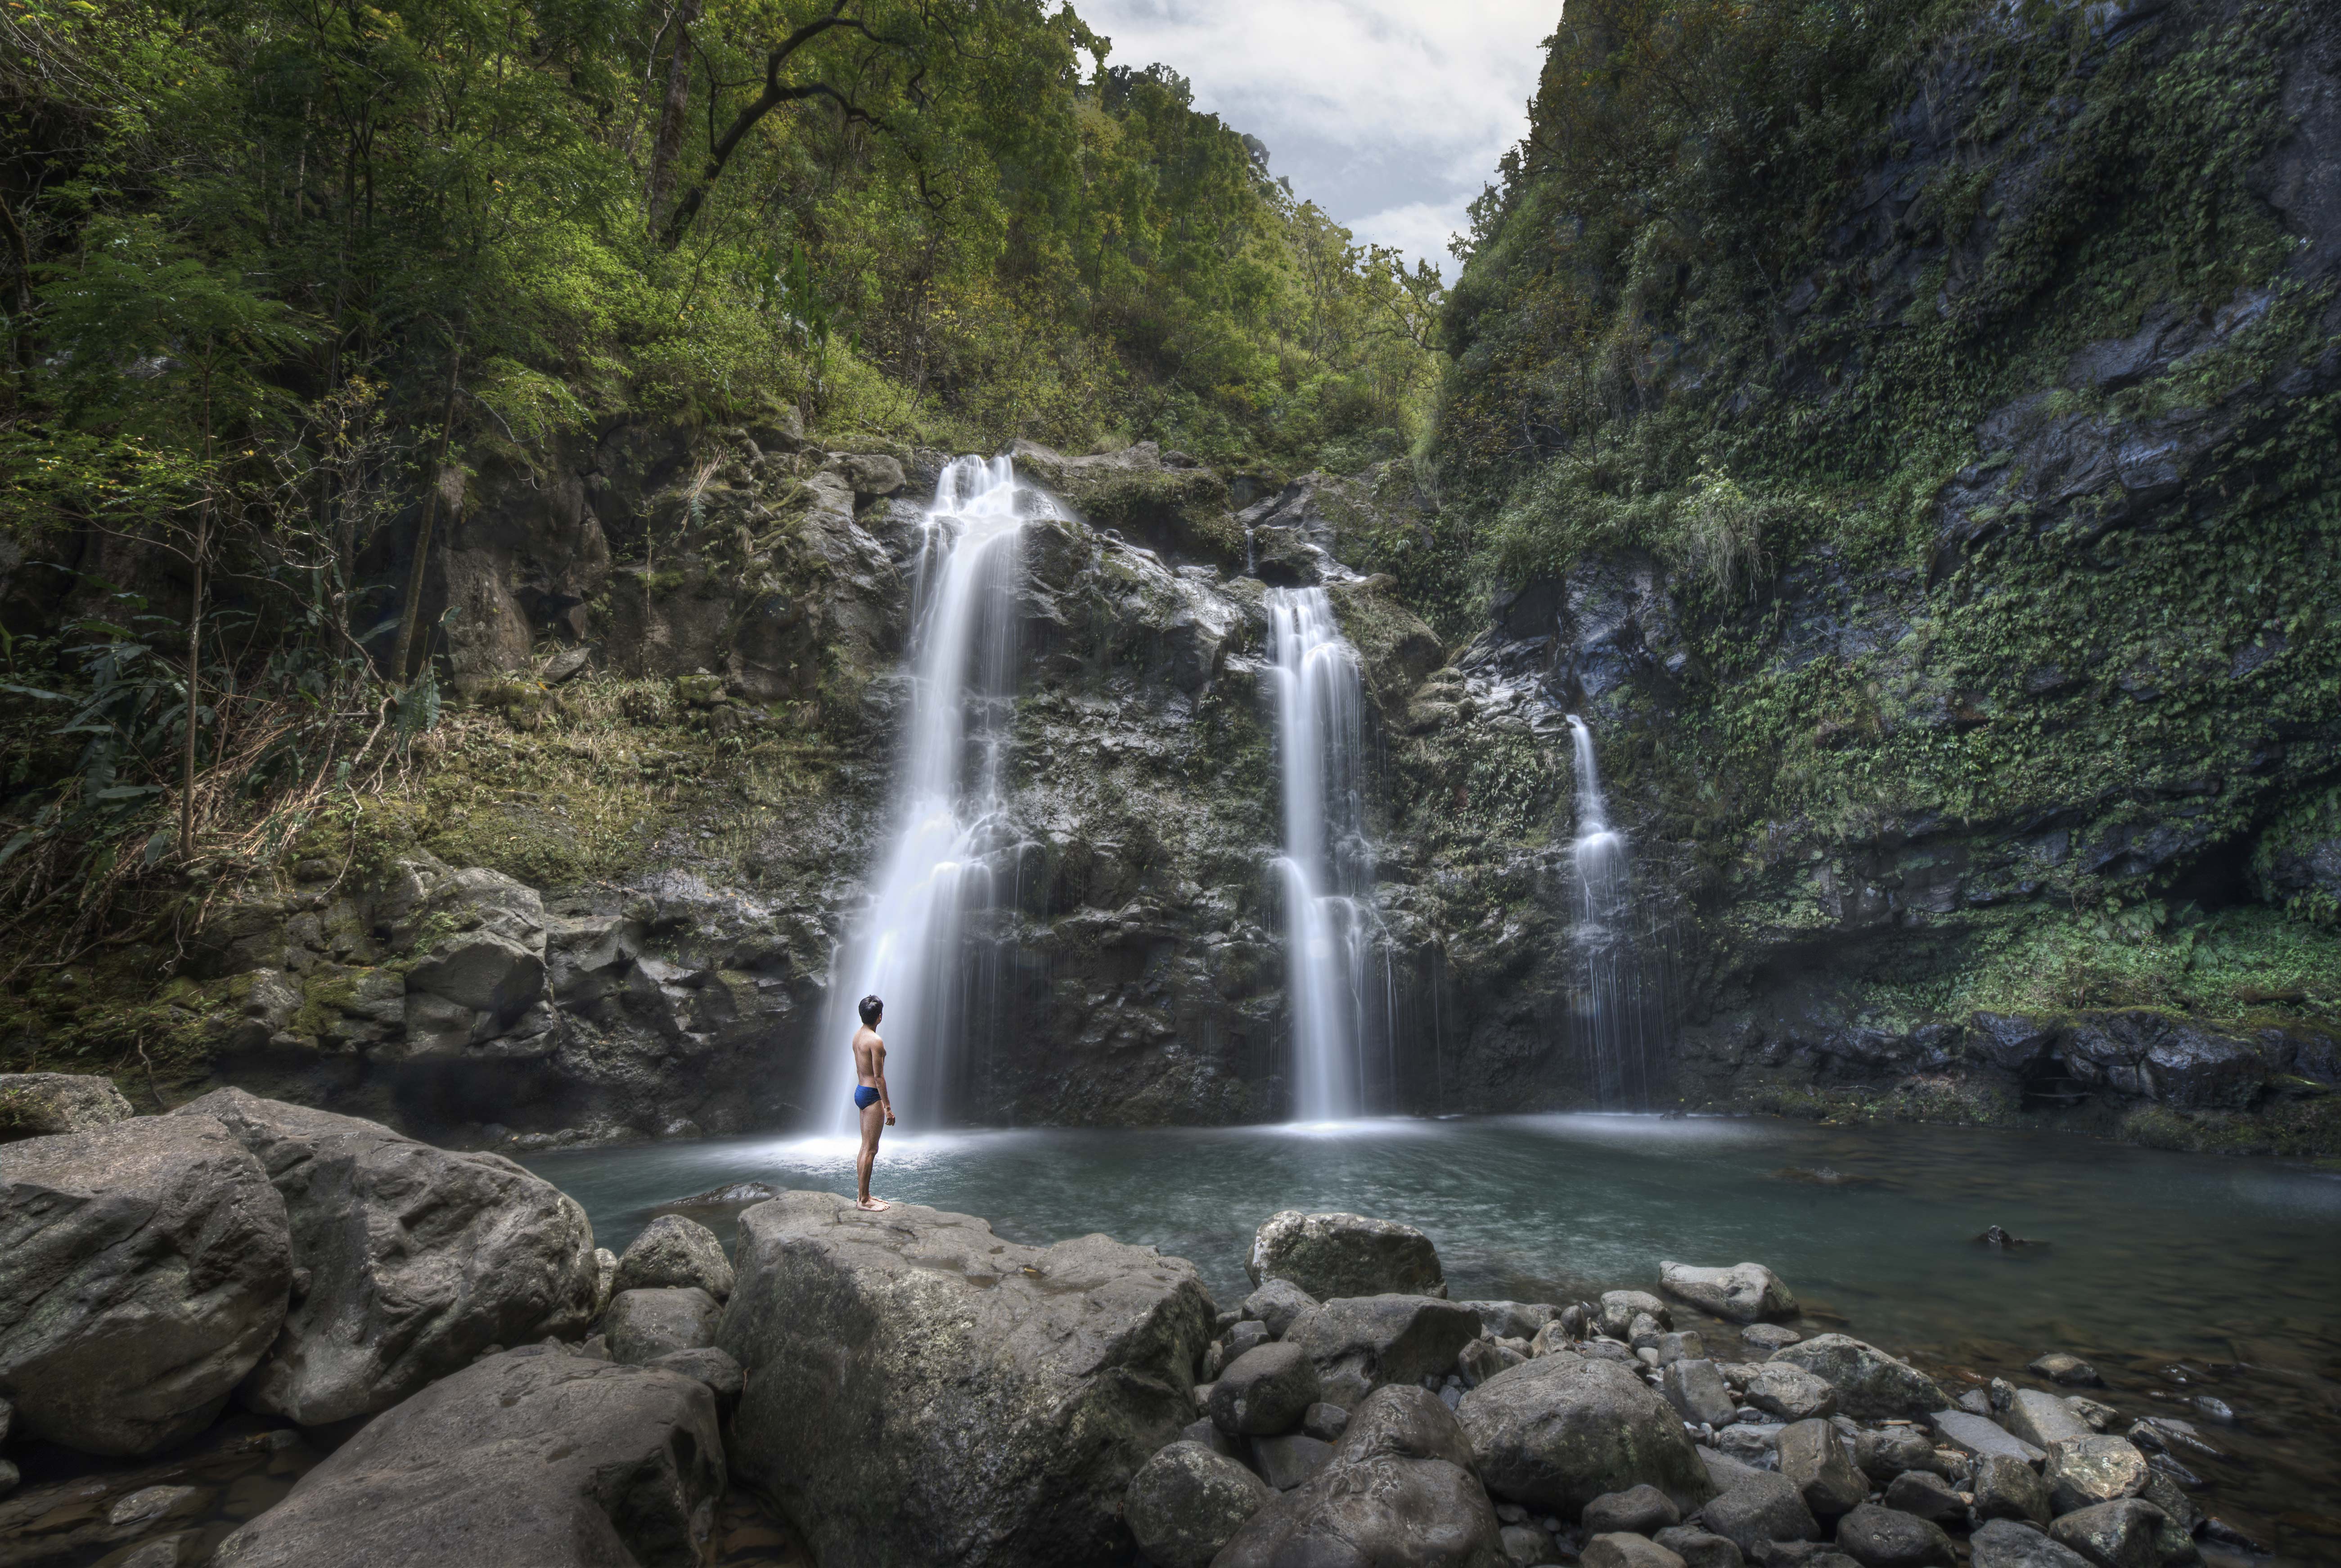 Upper Waikani Falls on the road to Hana. Image by Ed Freeman / Getty